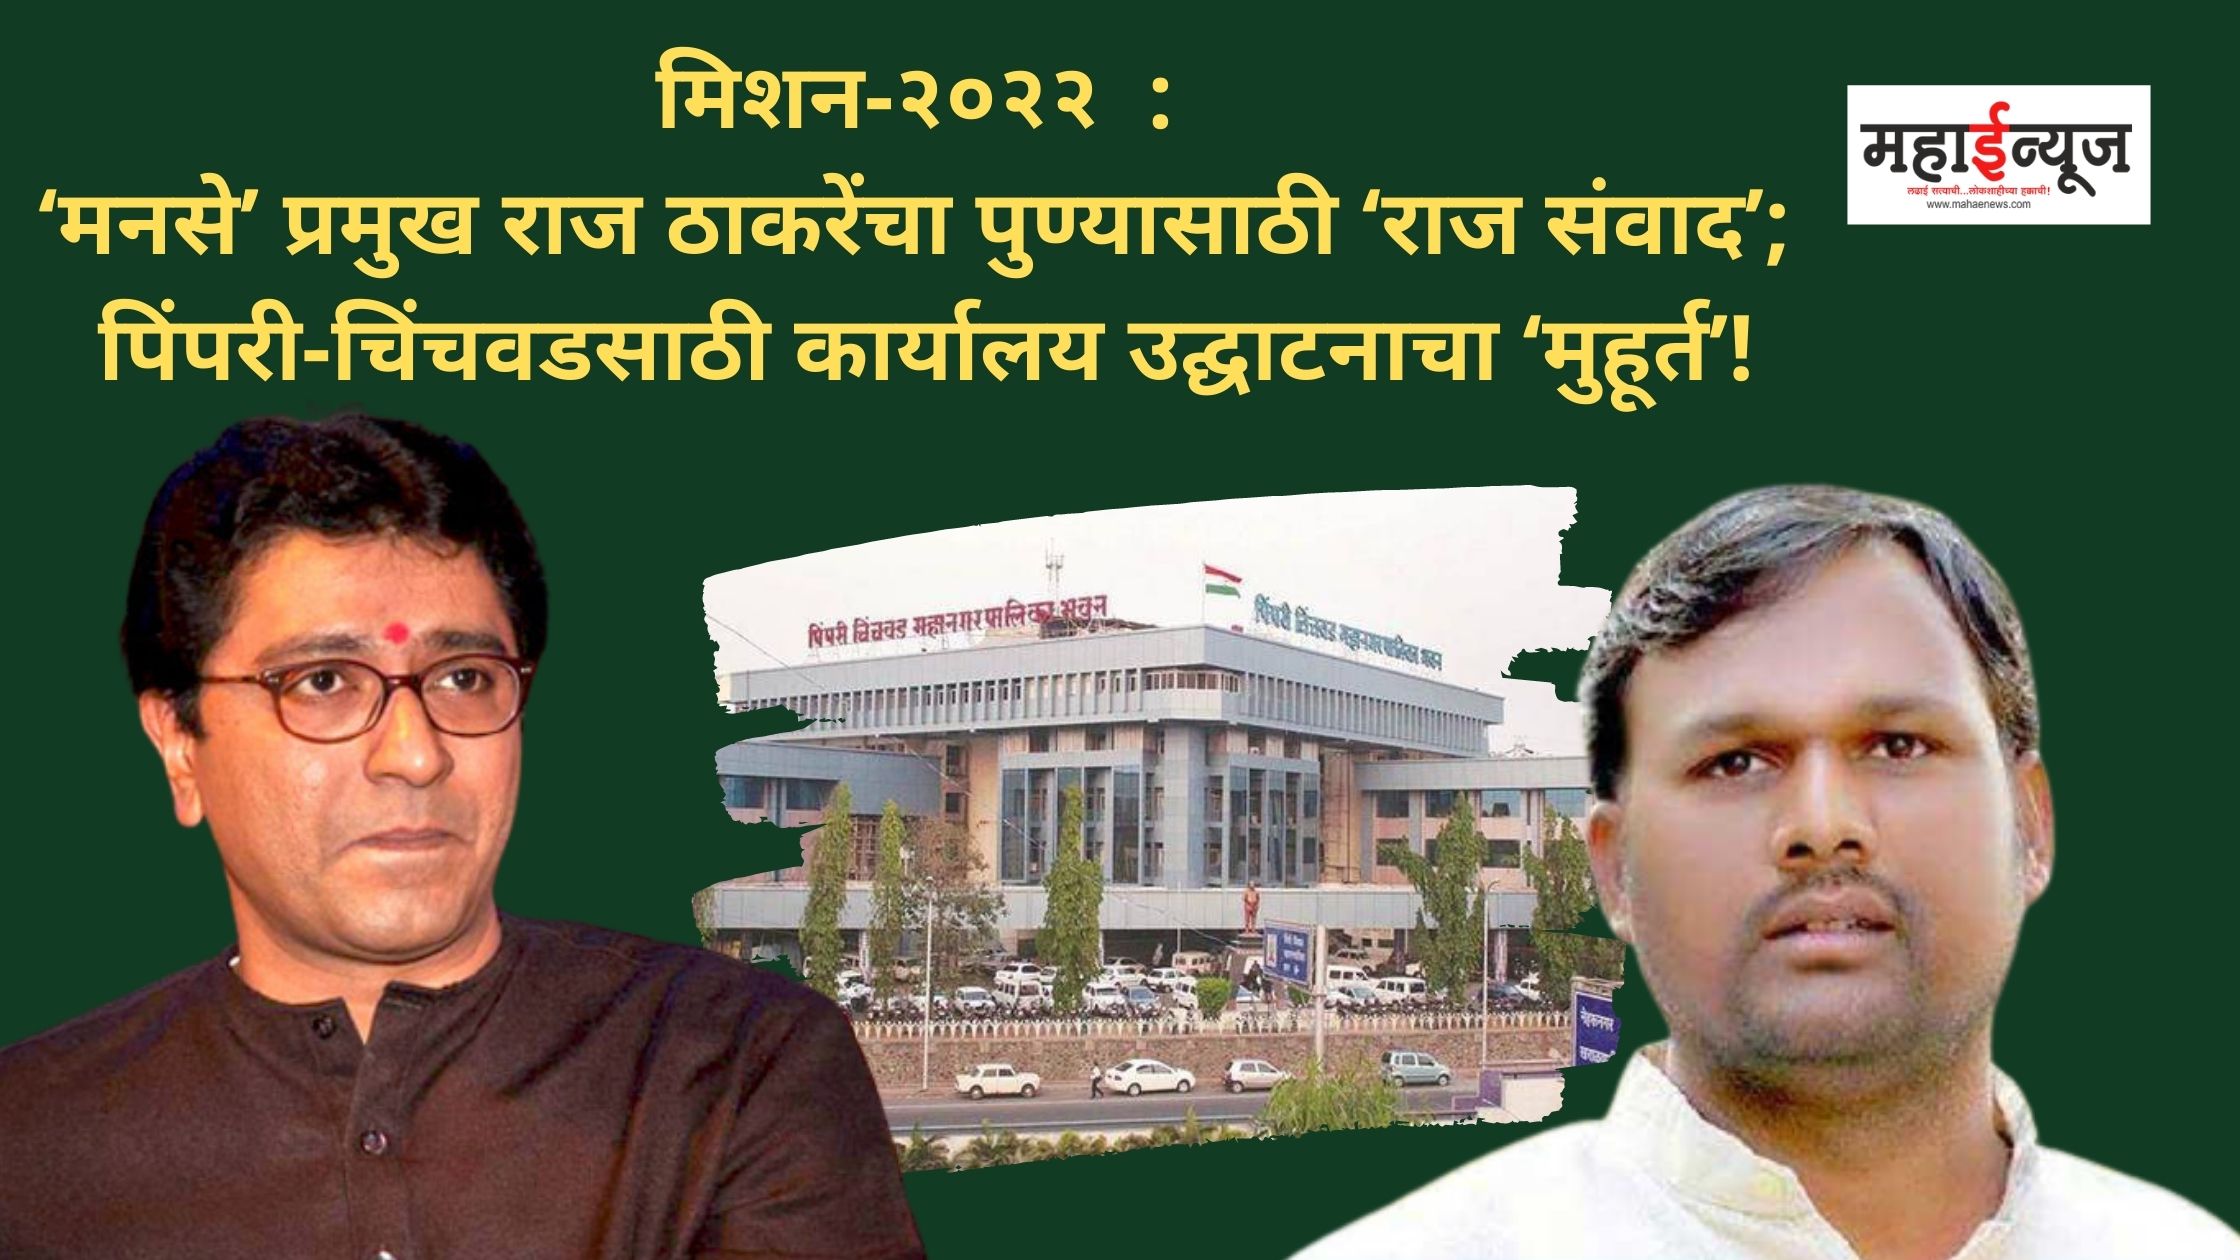 Mission-2022: MNS chief Raj Thackeray's 'Raj Samvad' for Pune; Office opening moment for Pimpri-Chinchwad!